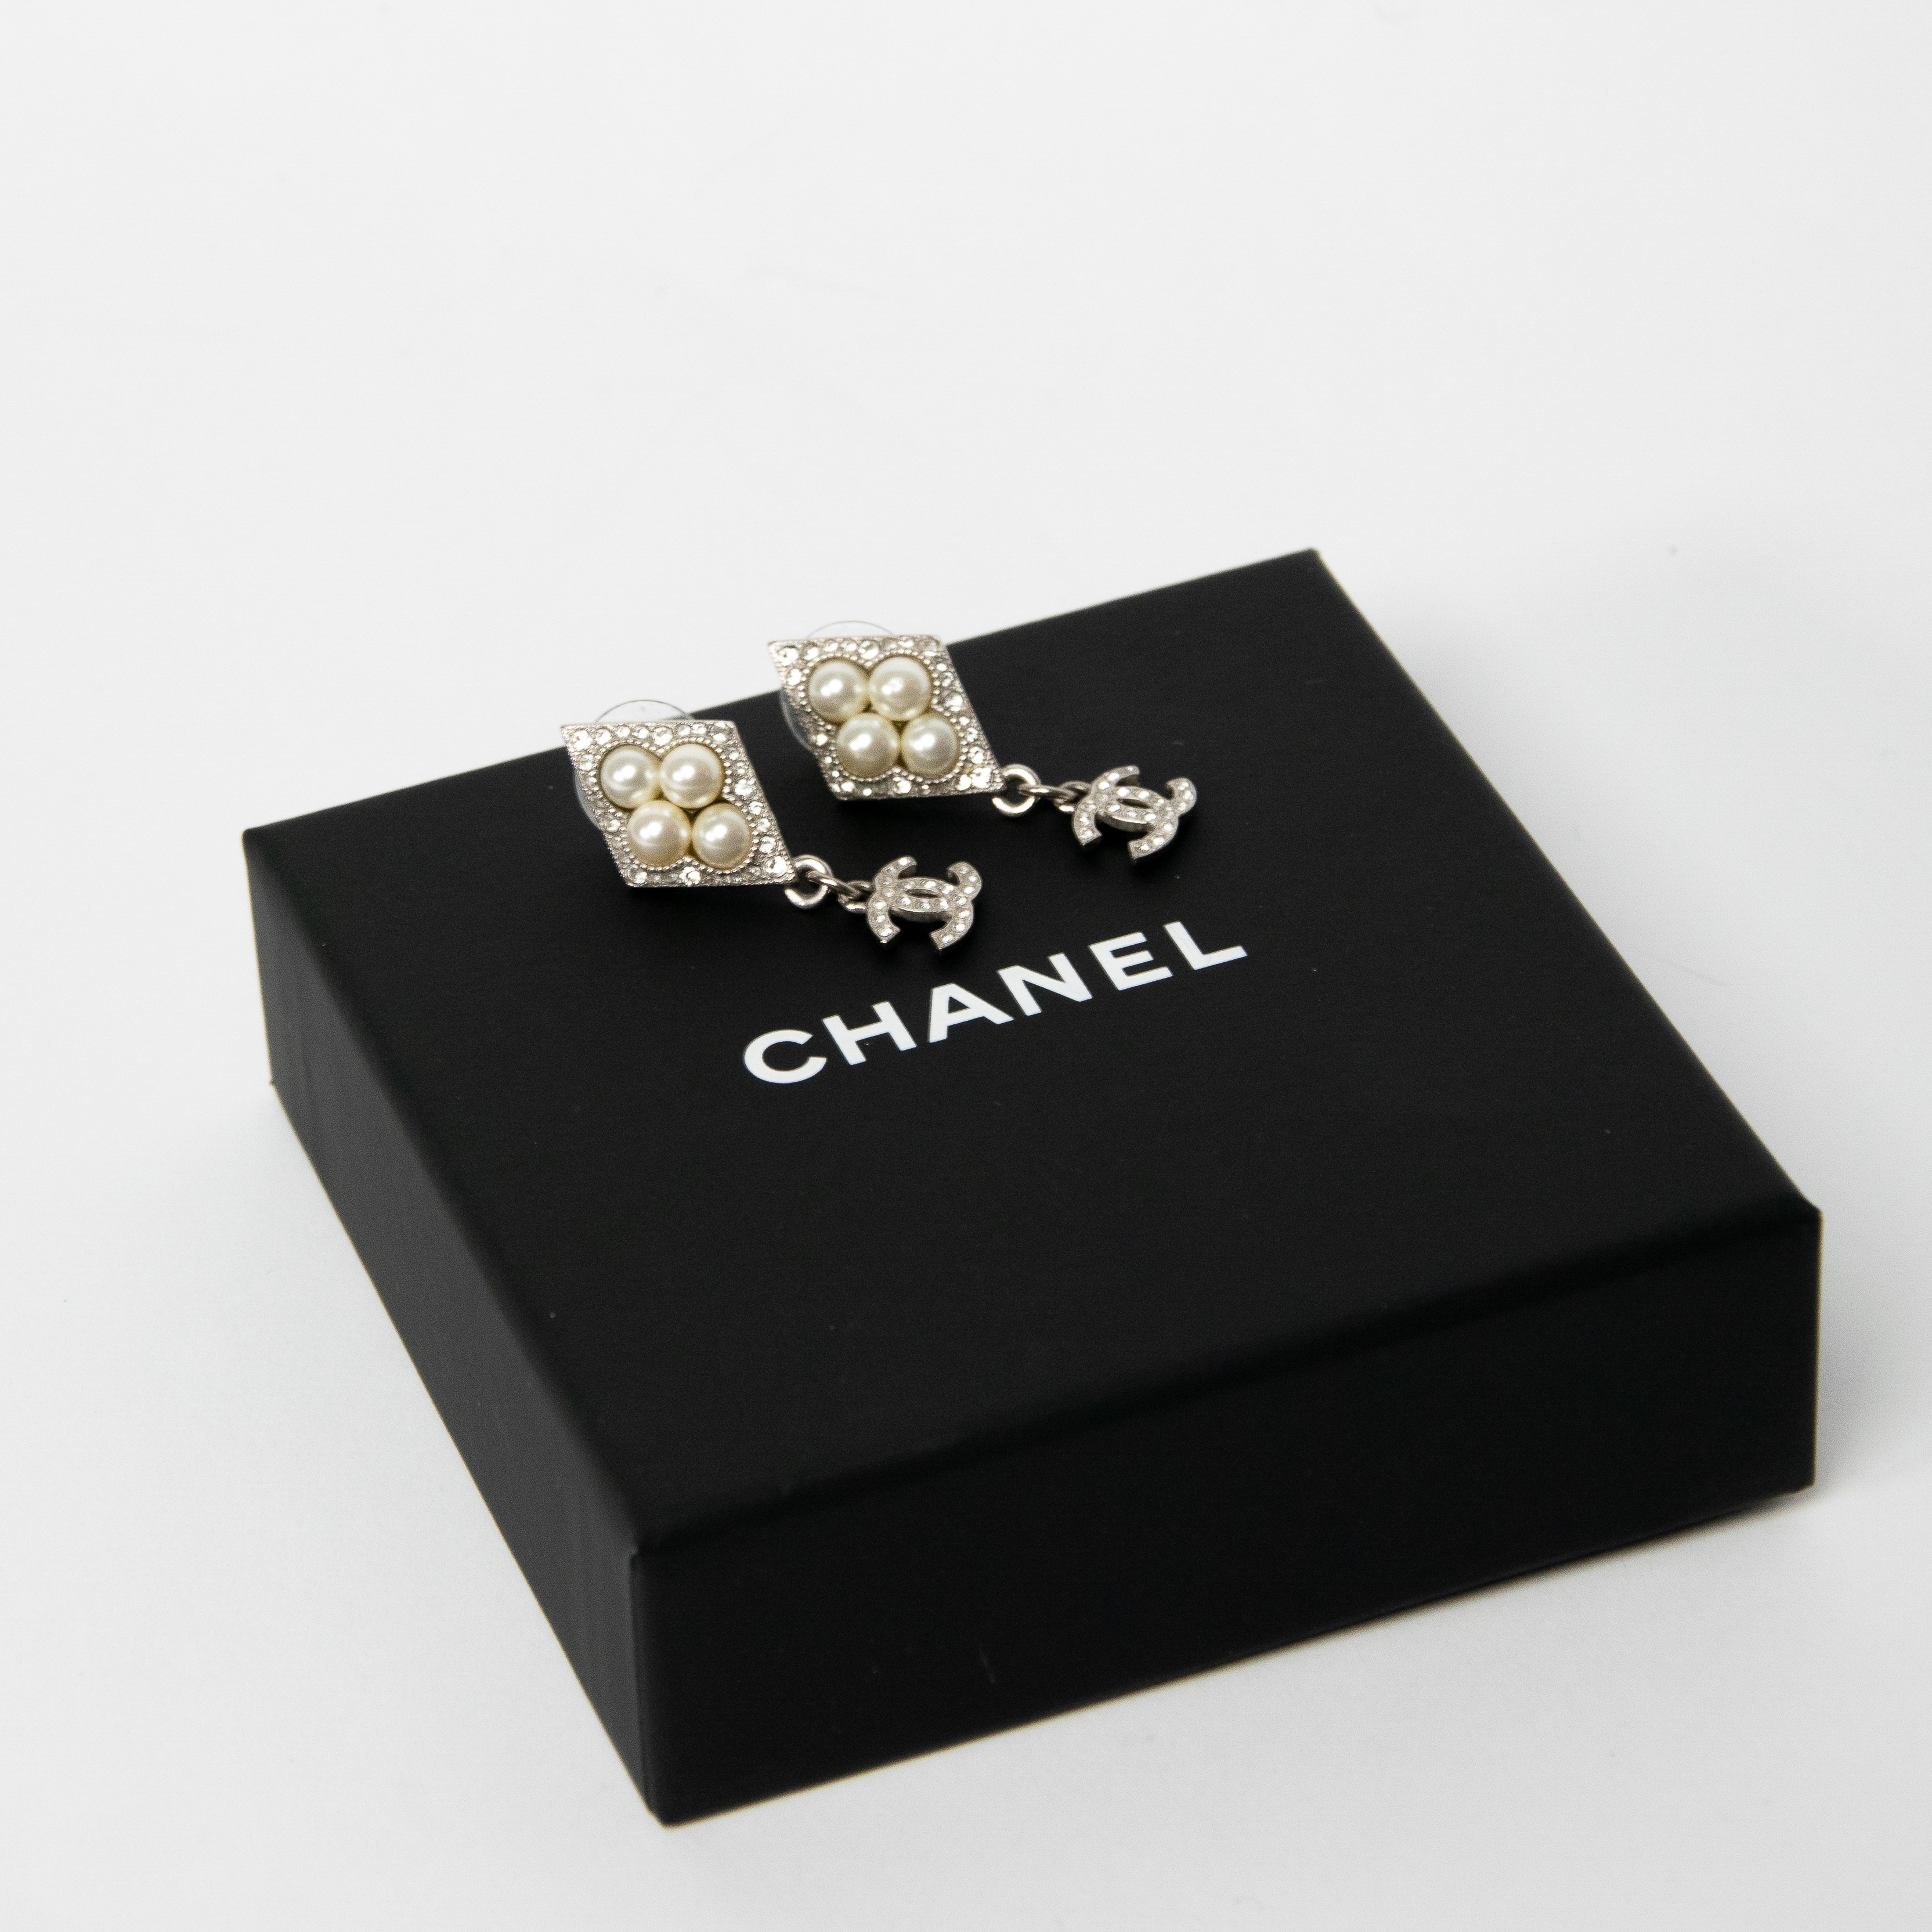 Chanel CC diamond pendant with pearls